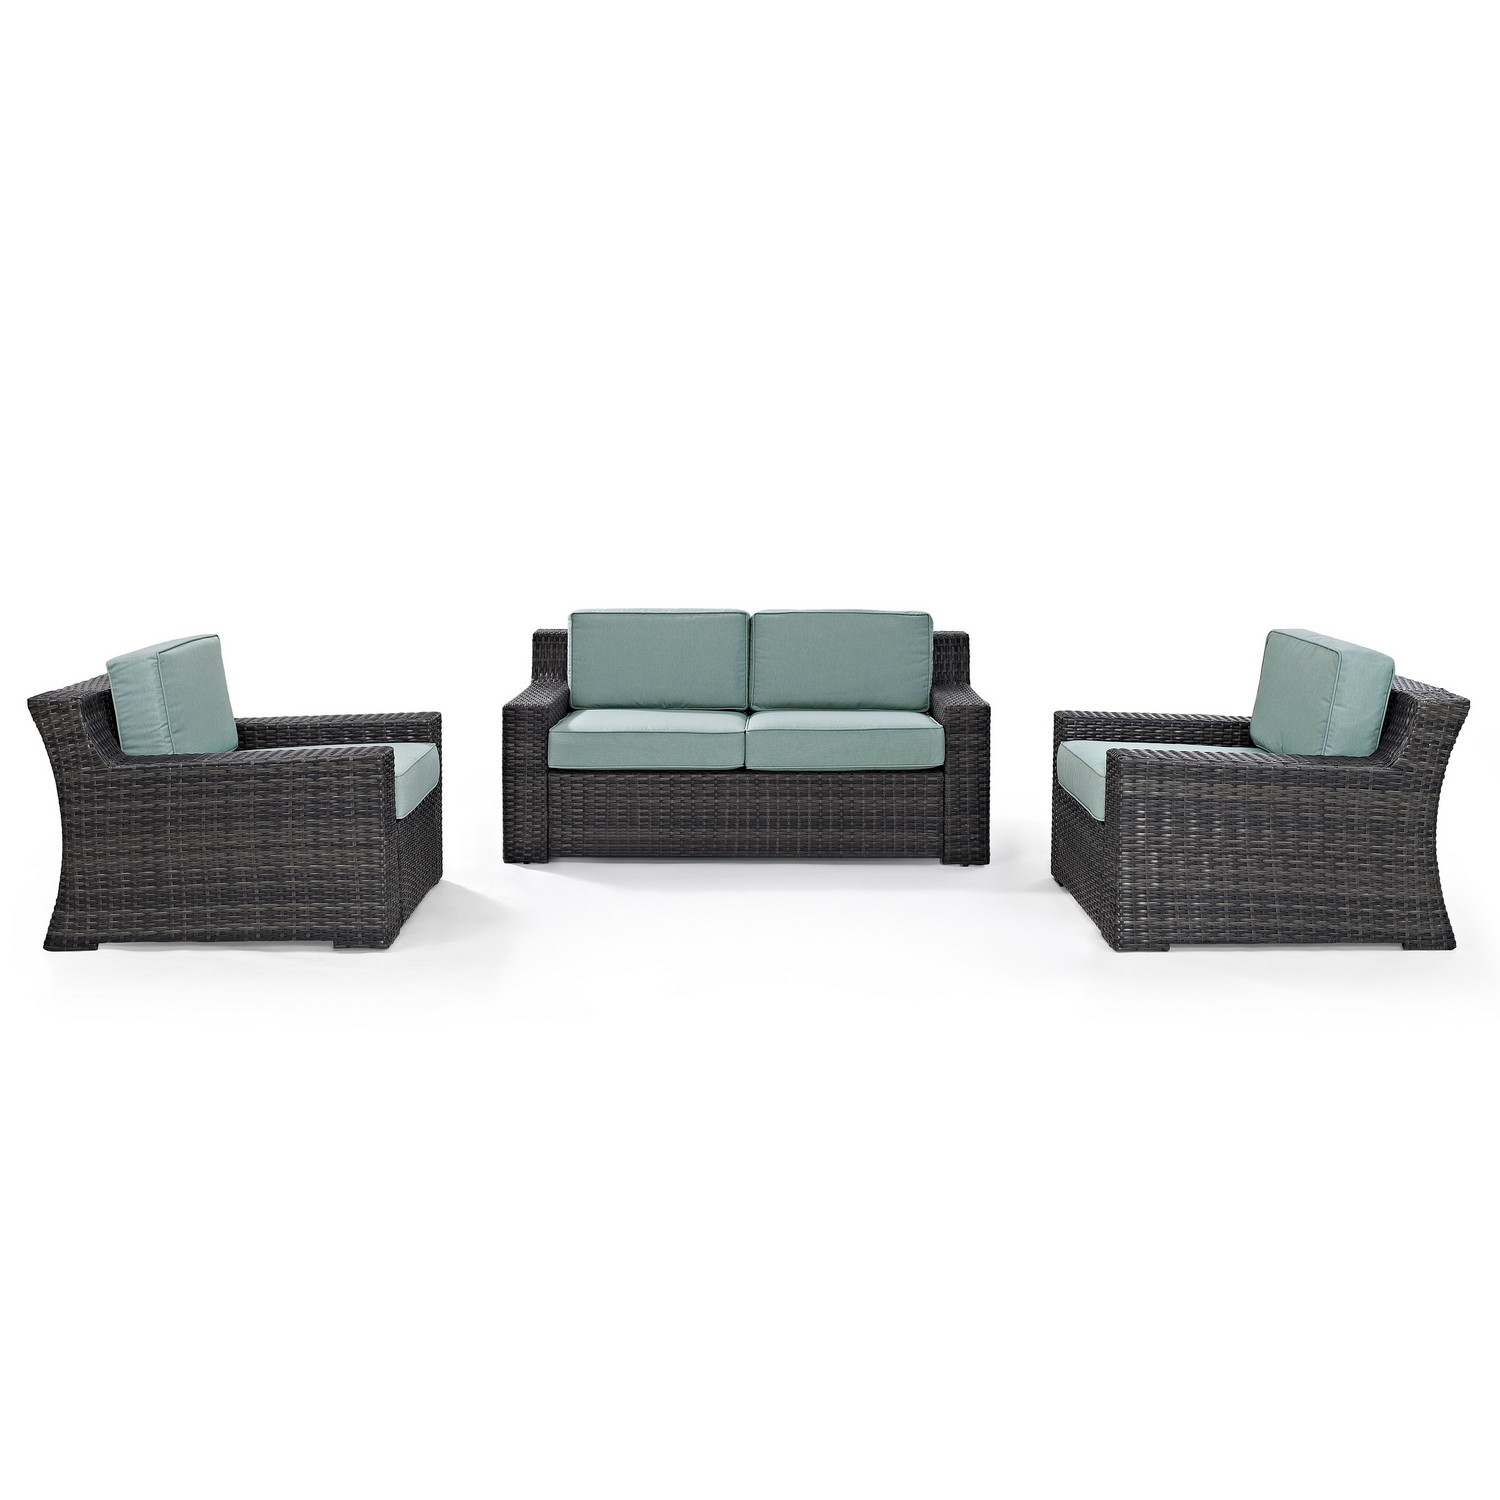 Crosley Beaufort 3-PC Outdoor Wicker Conversation Set - Loveseat, 2 Chairs - Mist/Brown